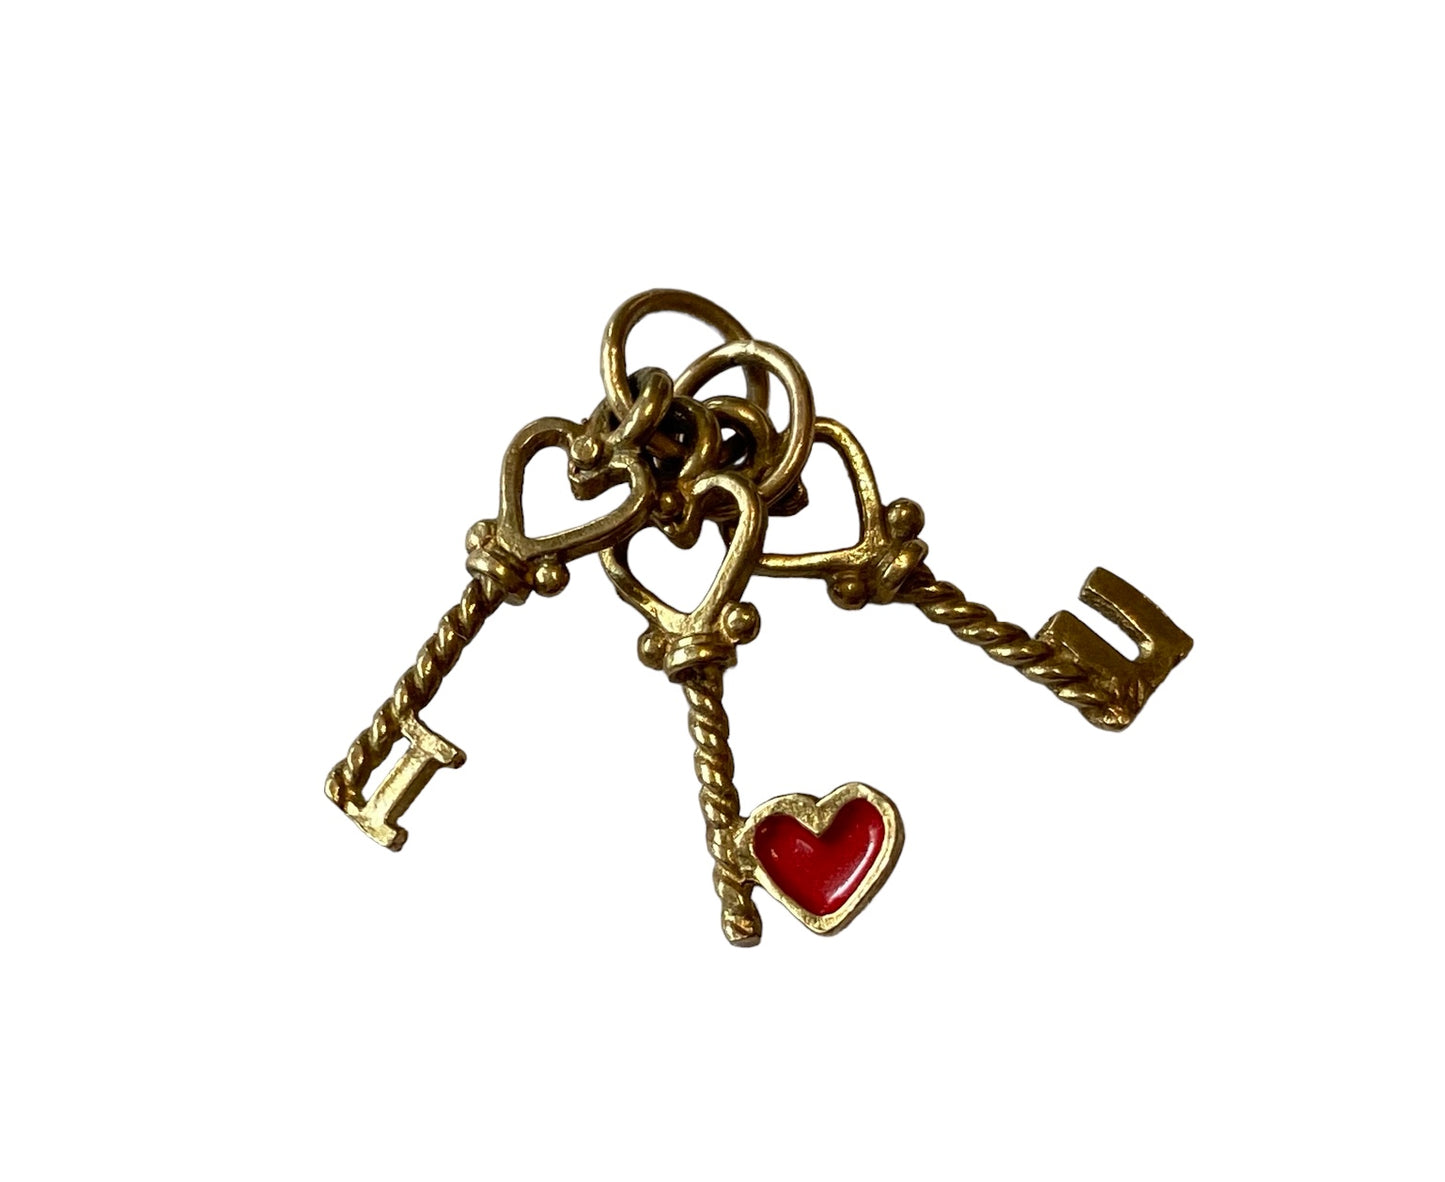 9ct vintage keys with 'I love you' charm / pendant